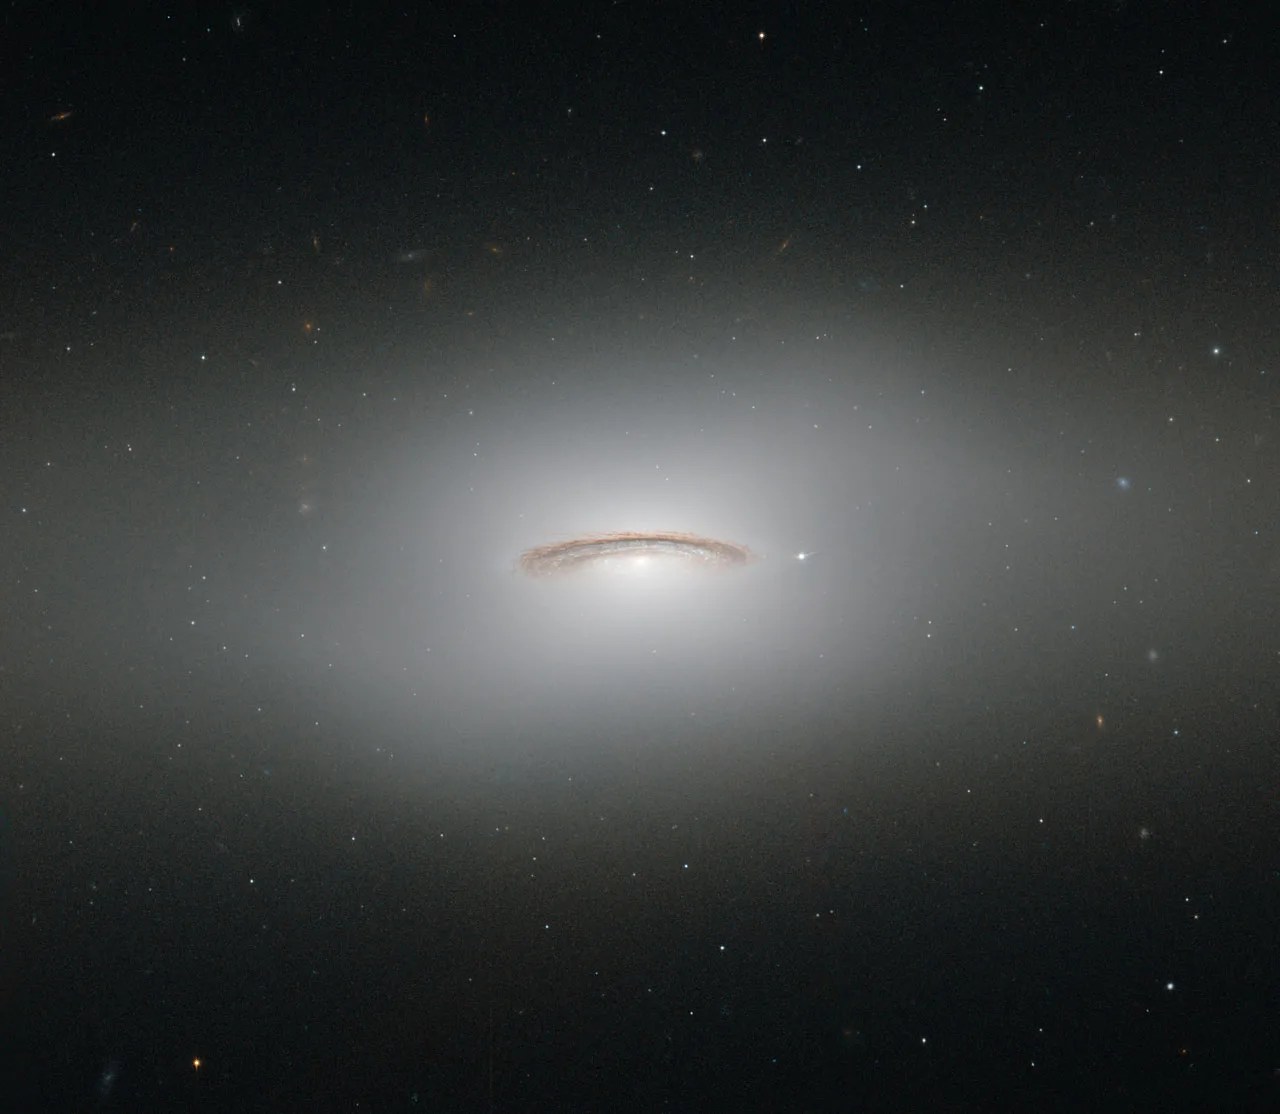 Bright lenticular galaxy in deep space